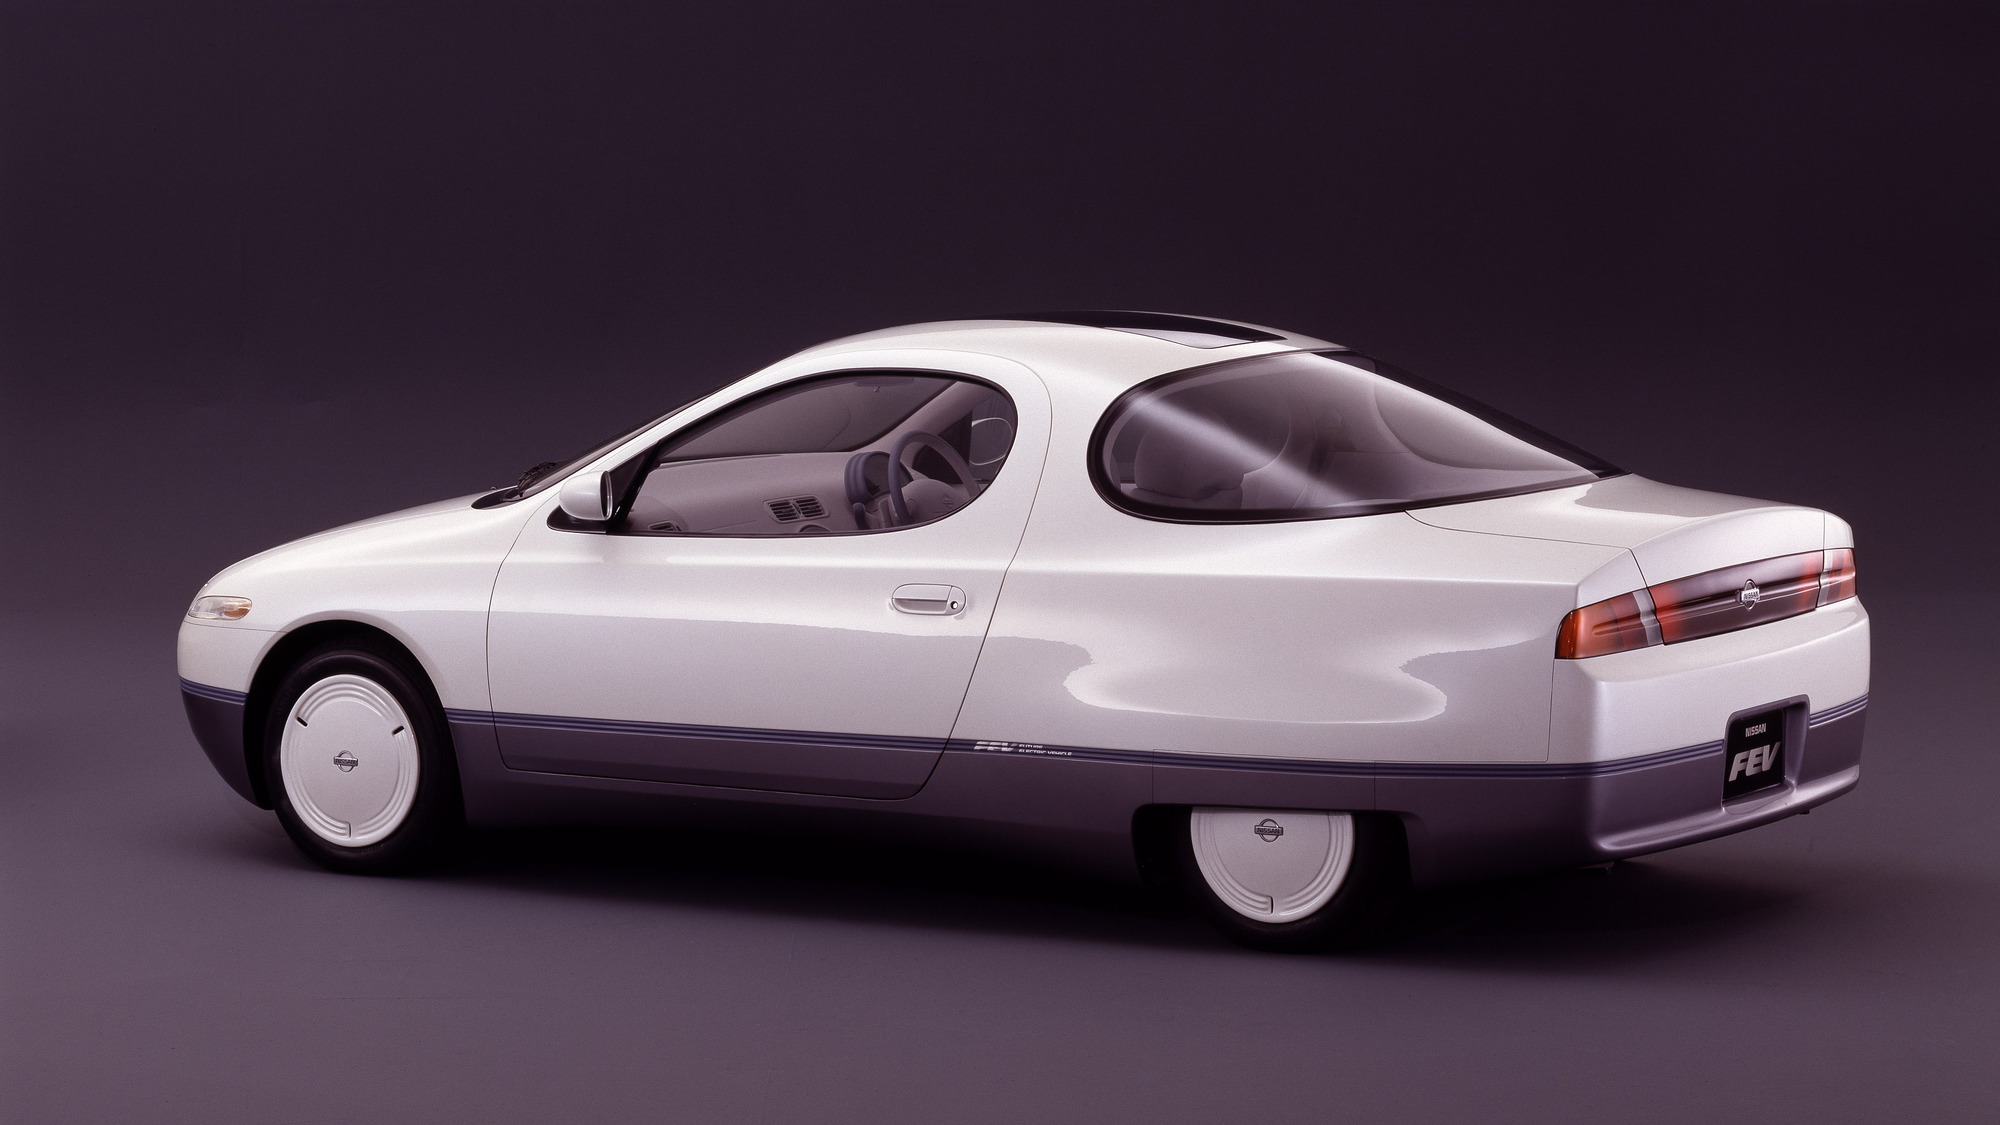 1991 Nissan FEV electric car concept